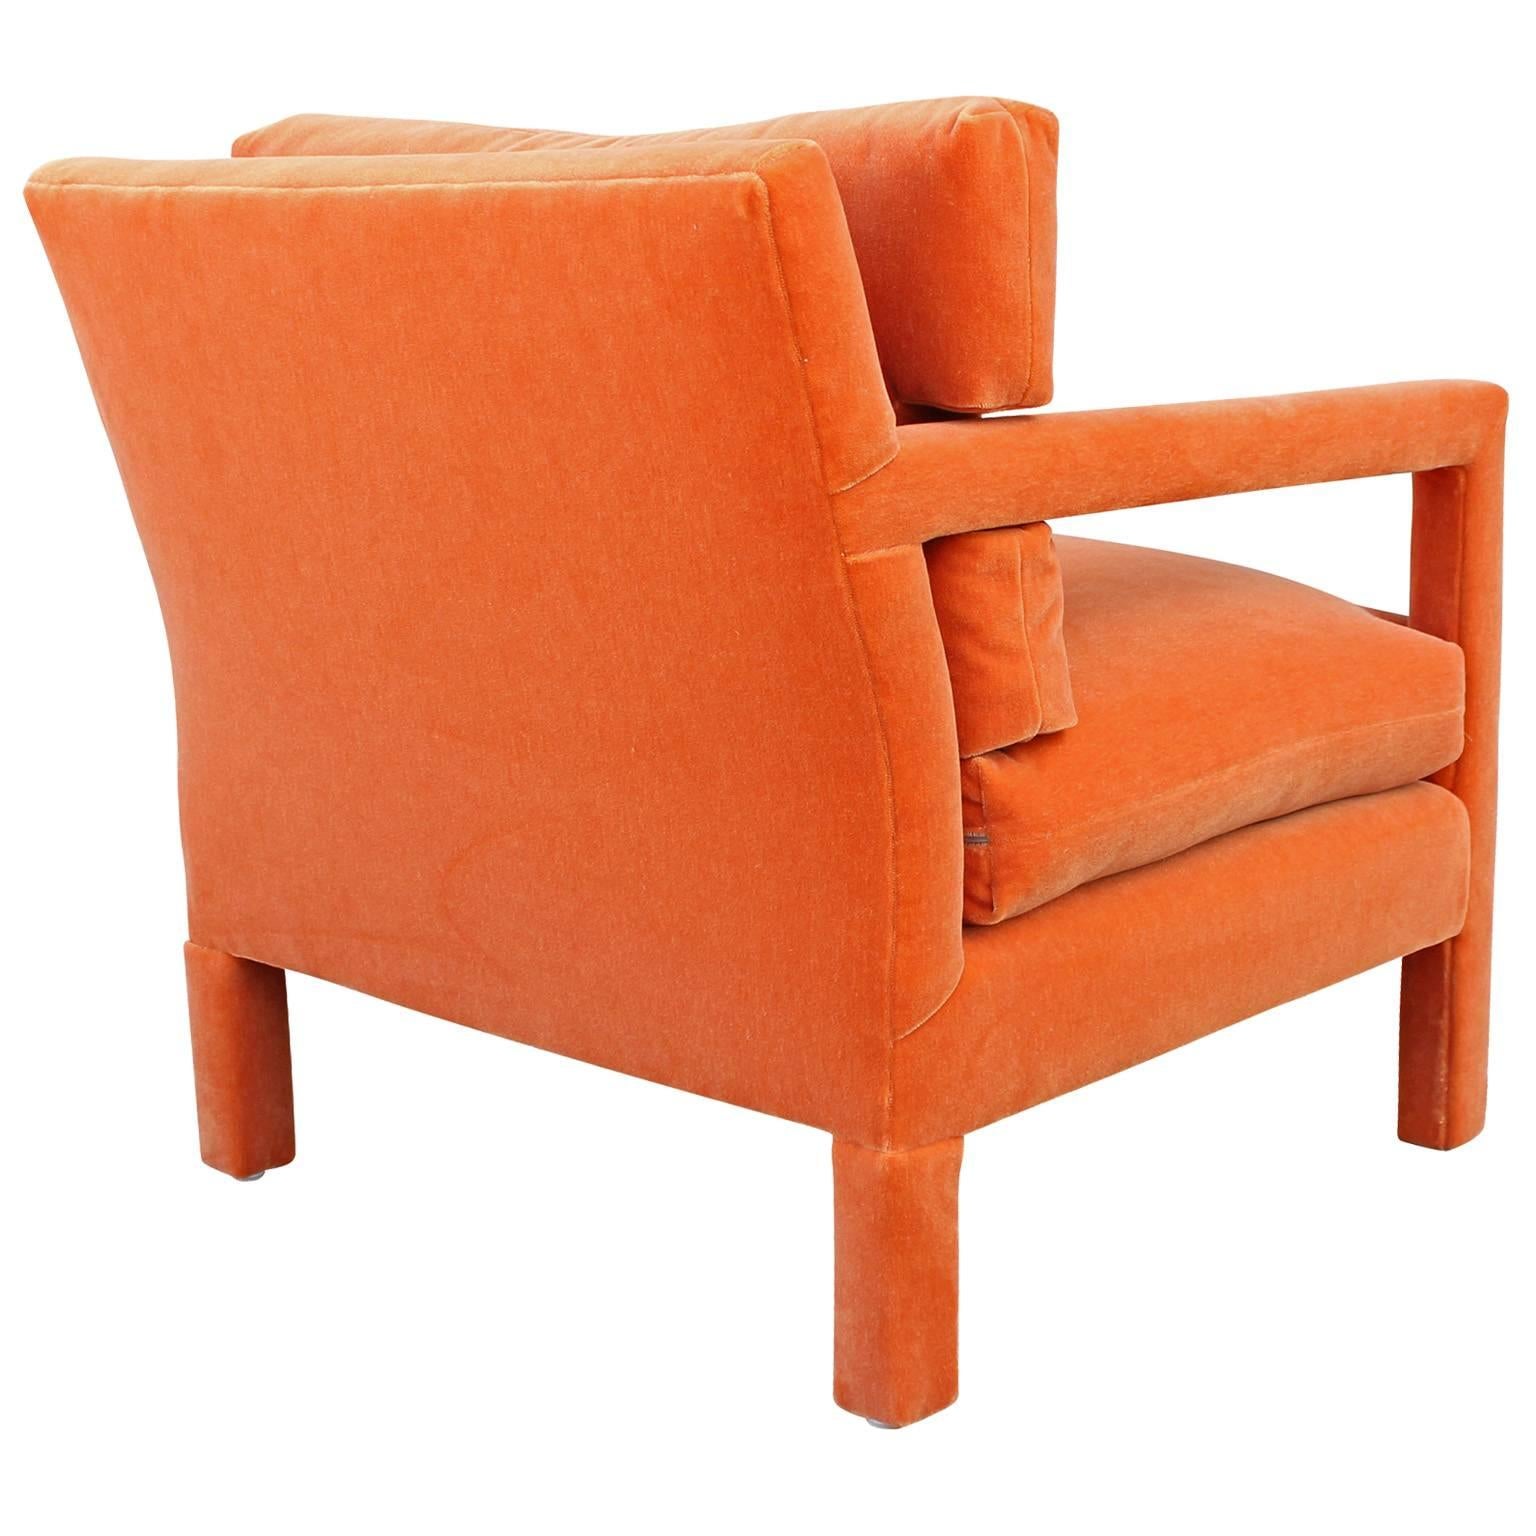 American Fabulous Pair of Milo Baughman Parsons Style Chairs in Orange Mohair Velvet